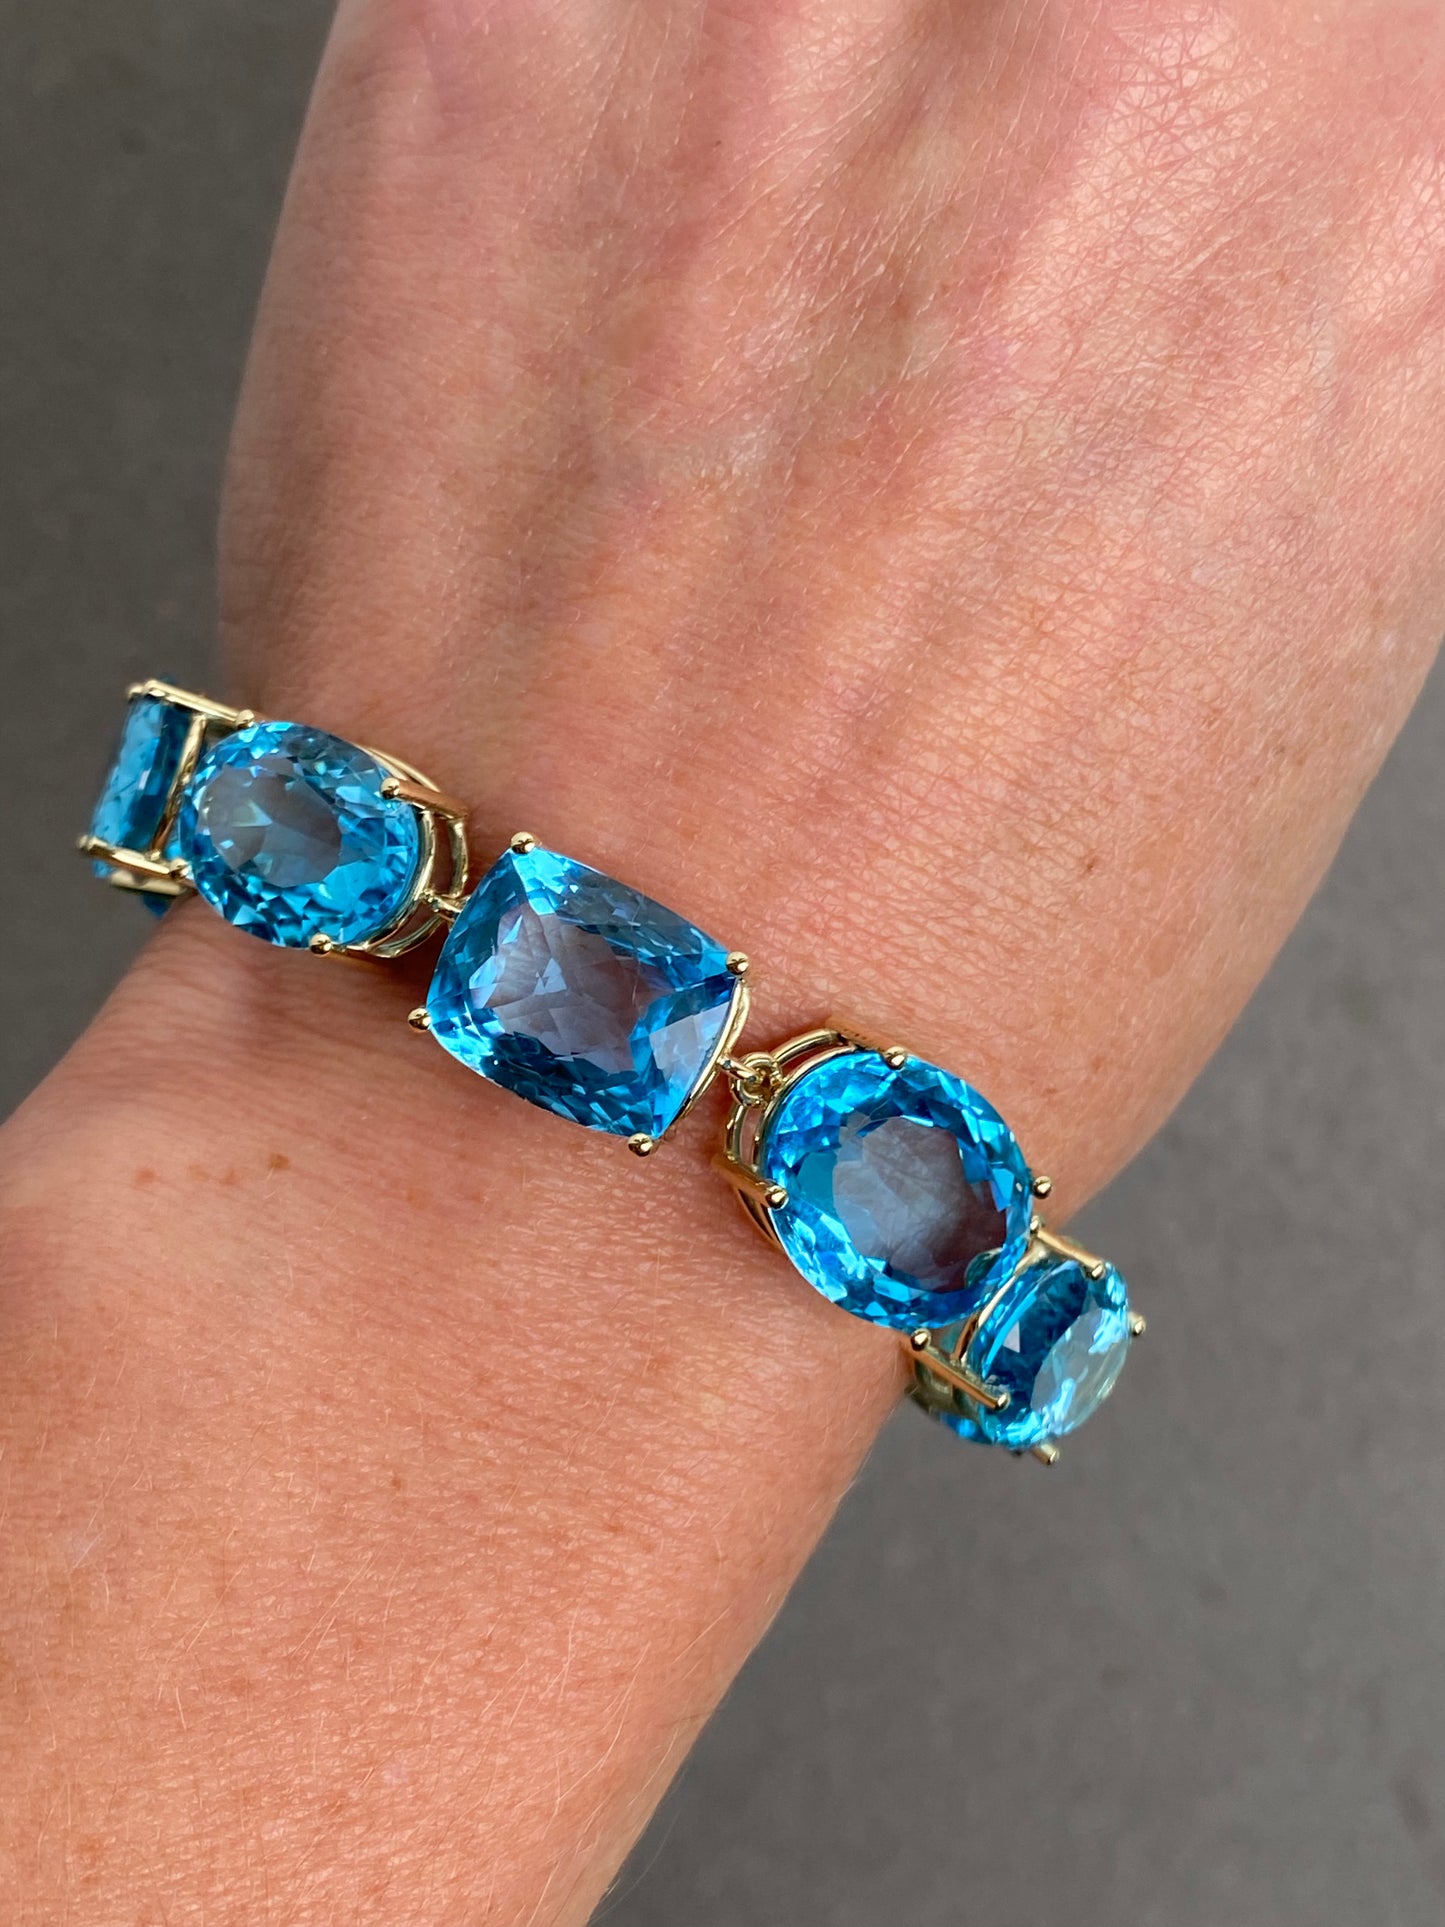 Full rivière bracelet blue topaz